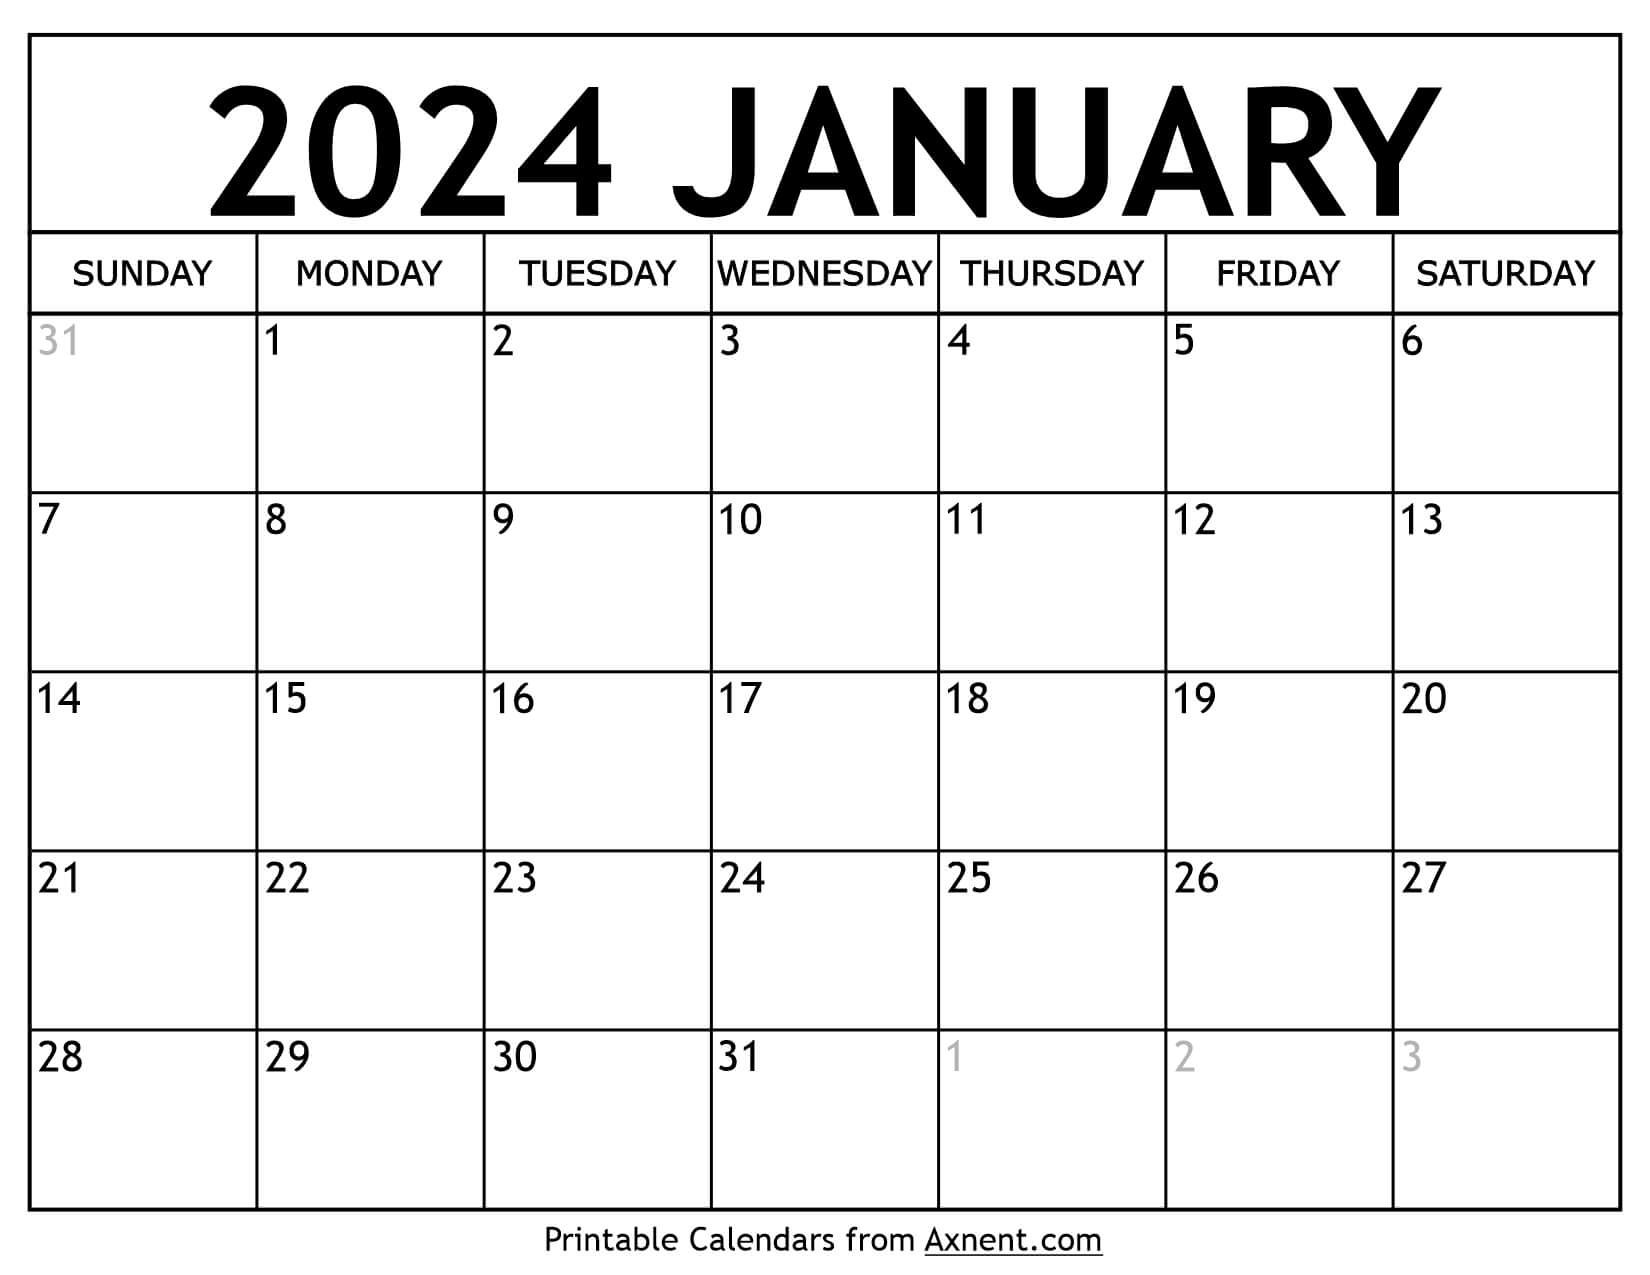 Printable January 2024 Calendar Template - Print Now for Free Printable Jan 2024 Calendar